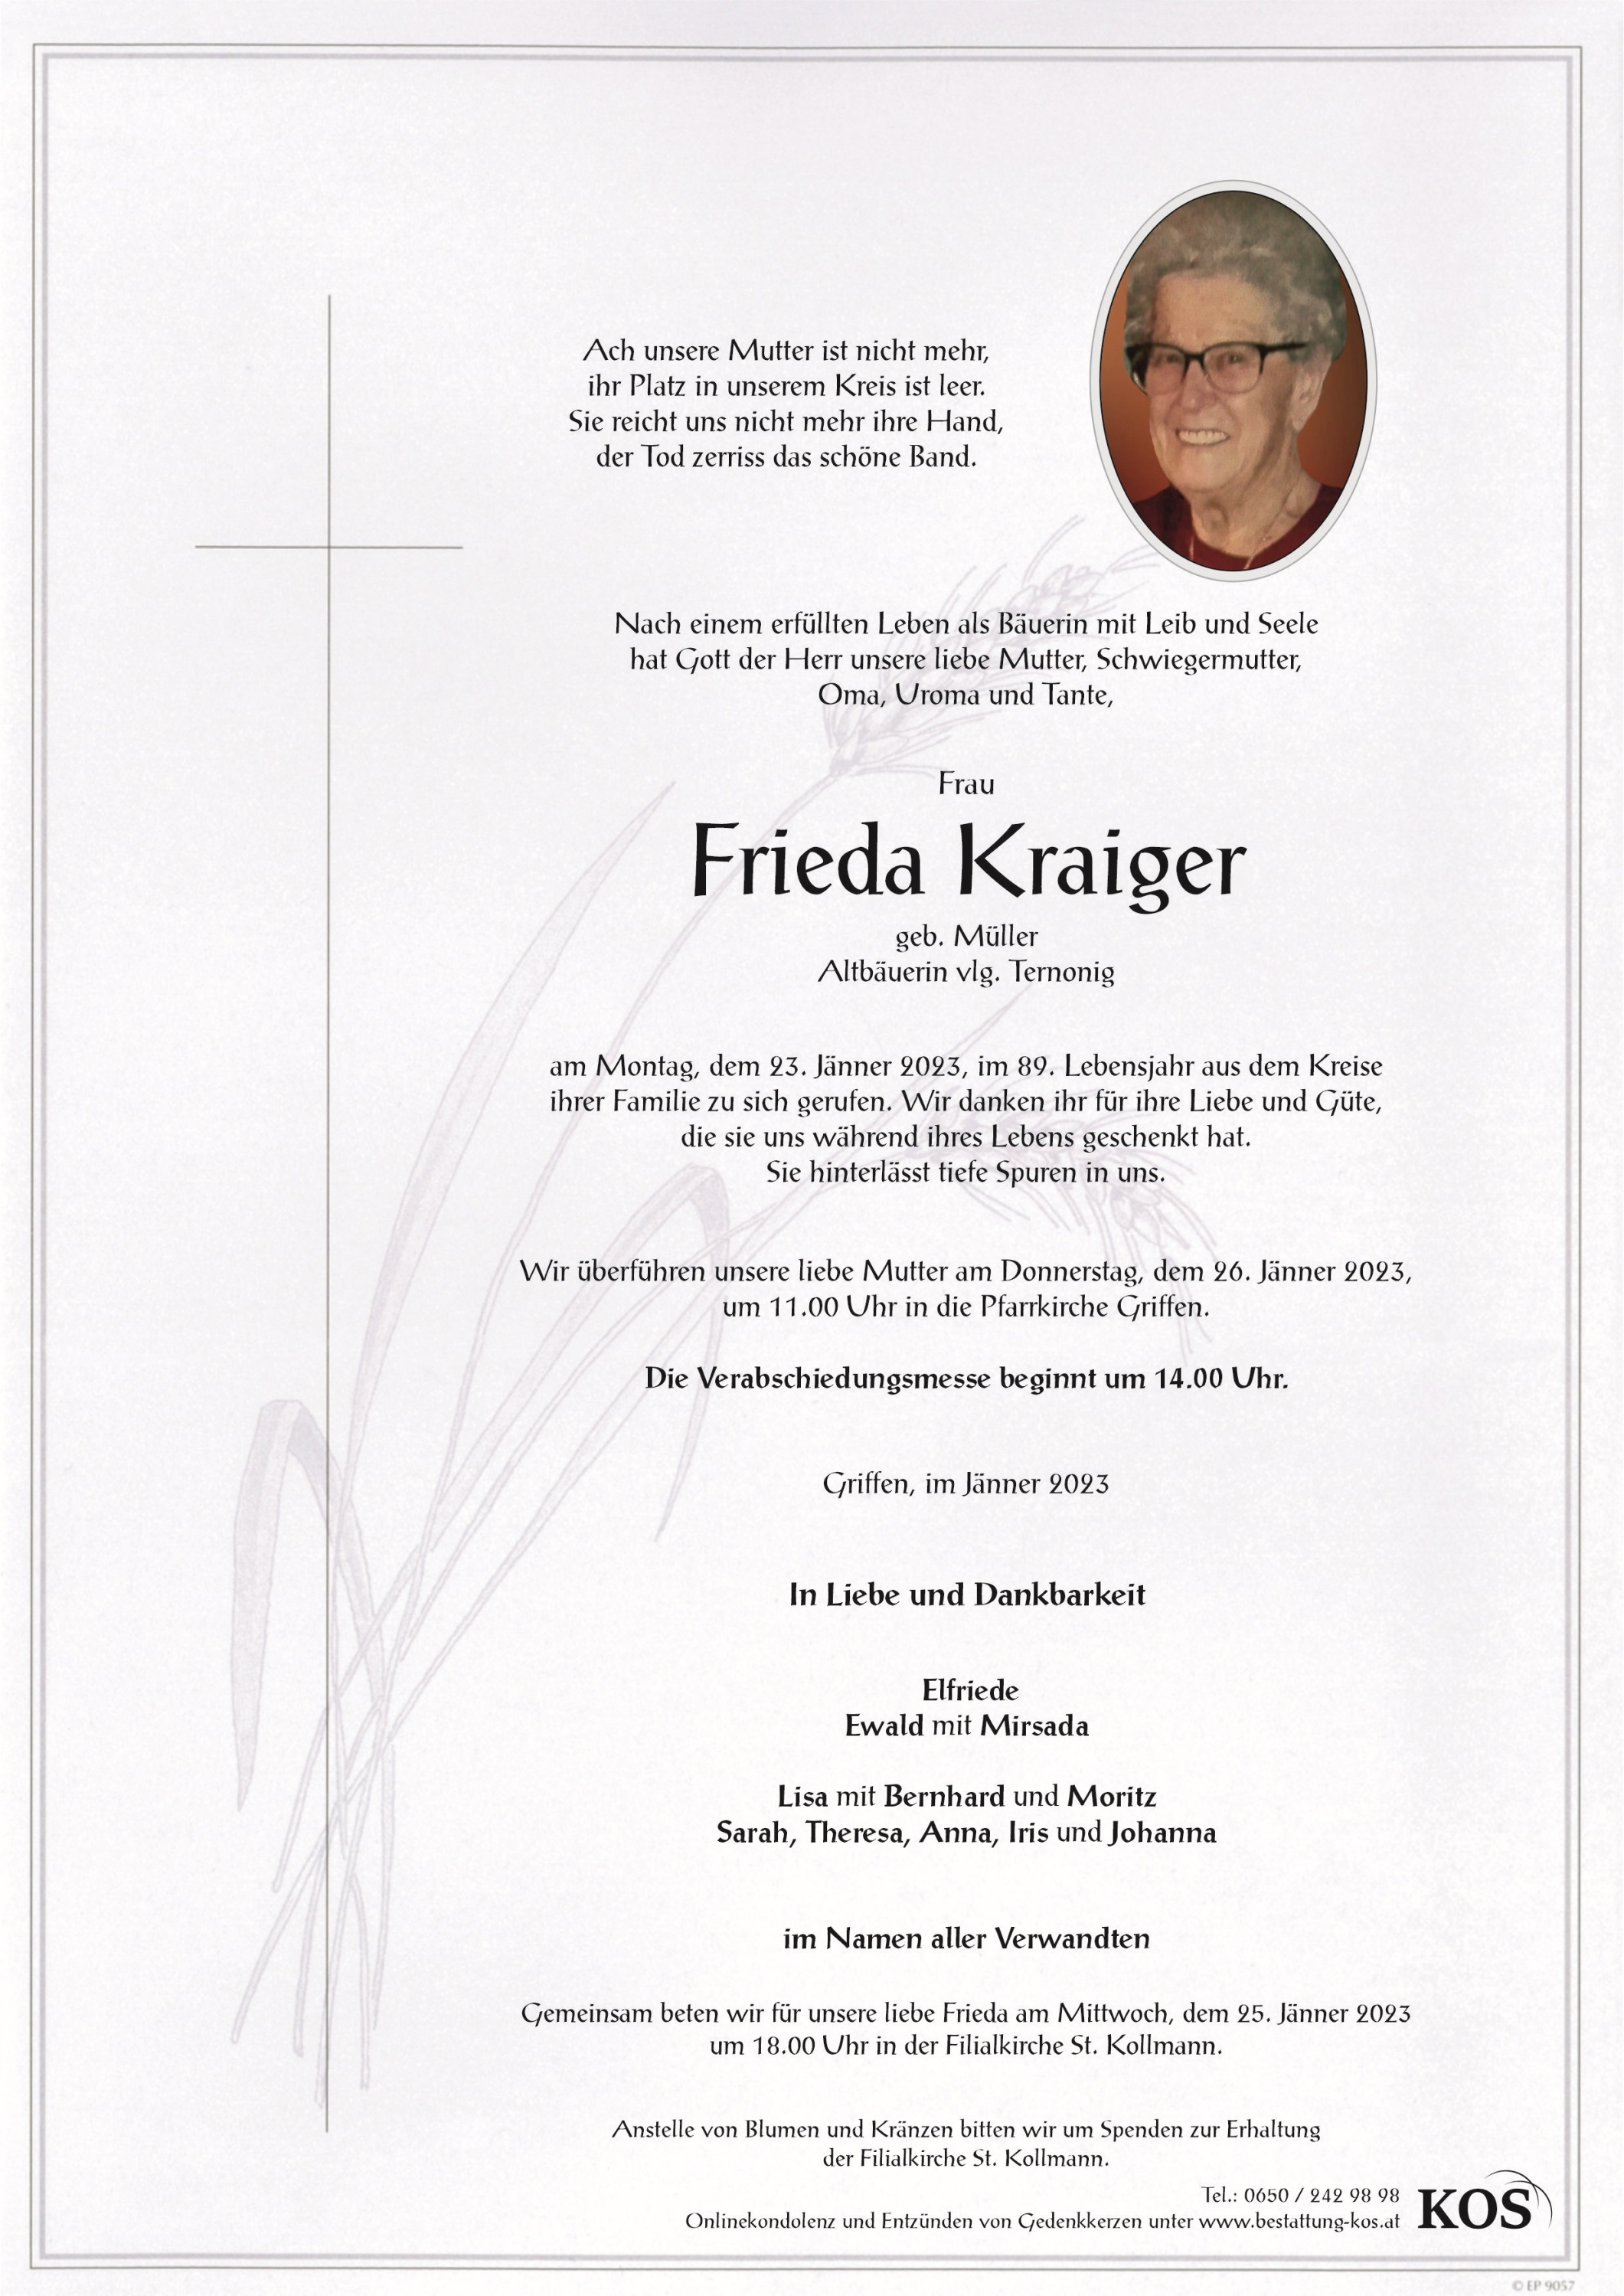 Frieda Kraiger